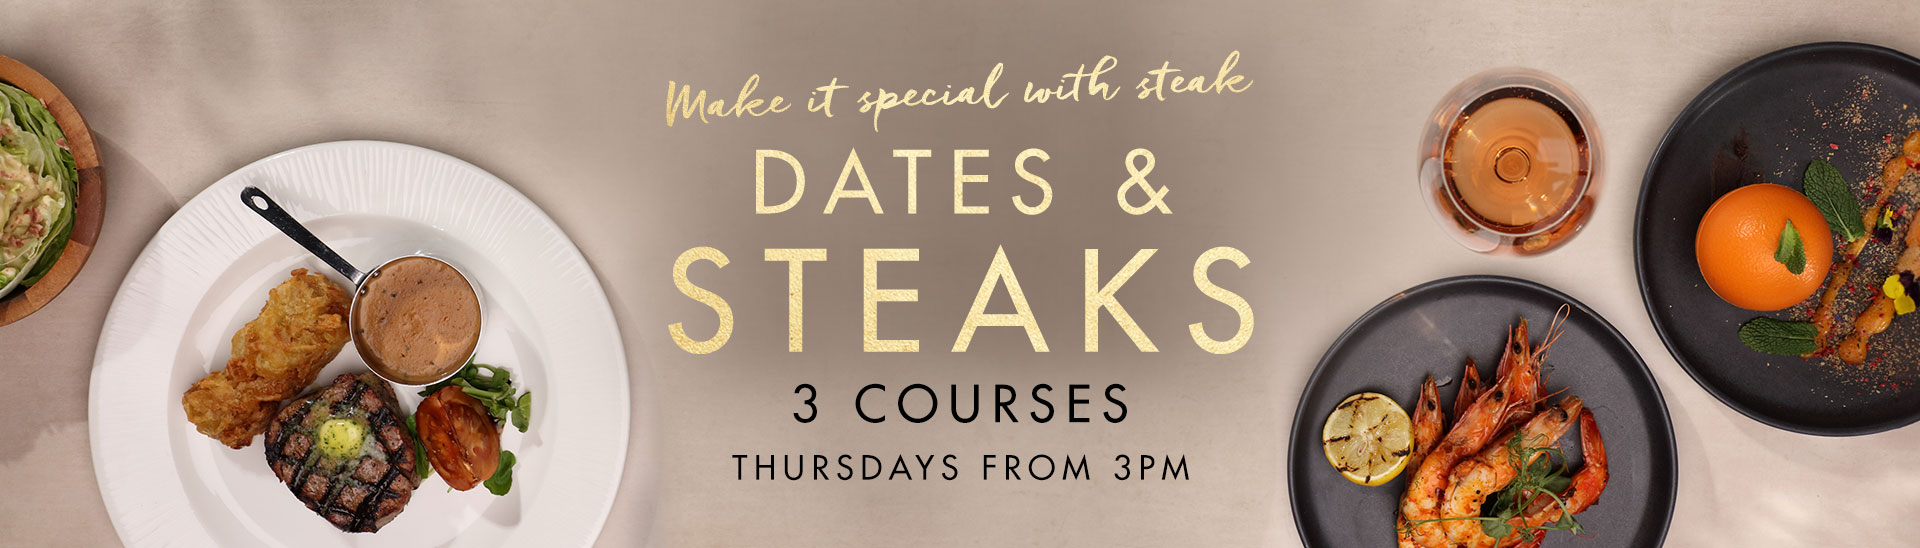 Dates & Steaks at Miller & Carter Horsham